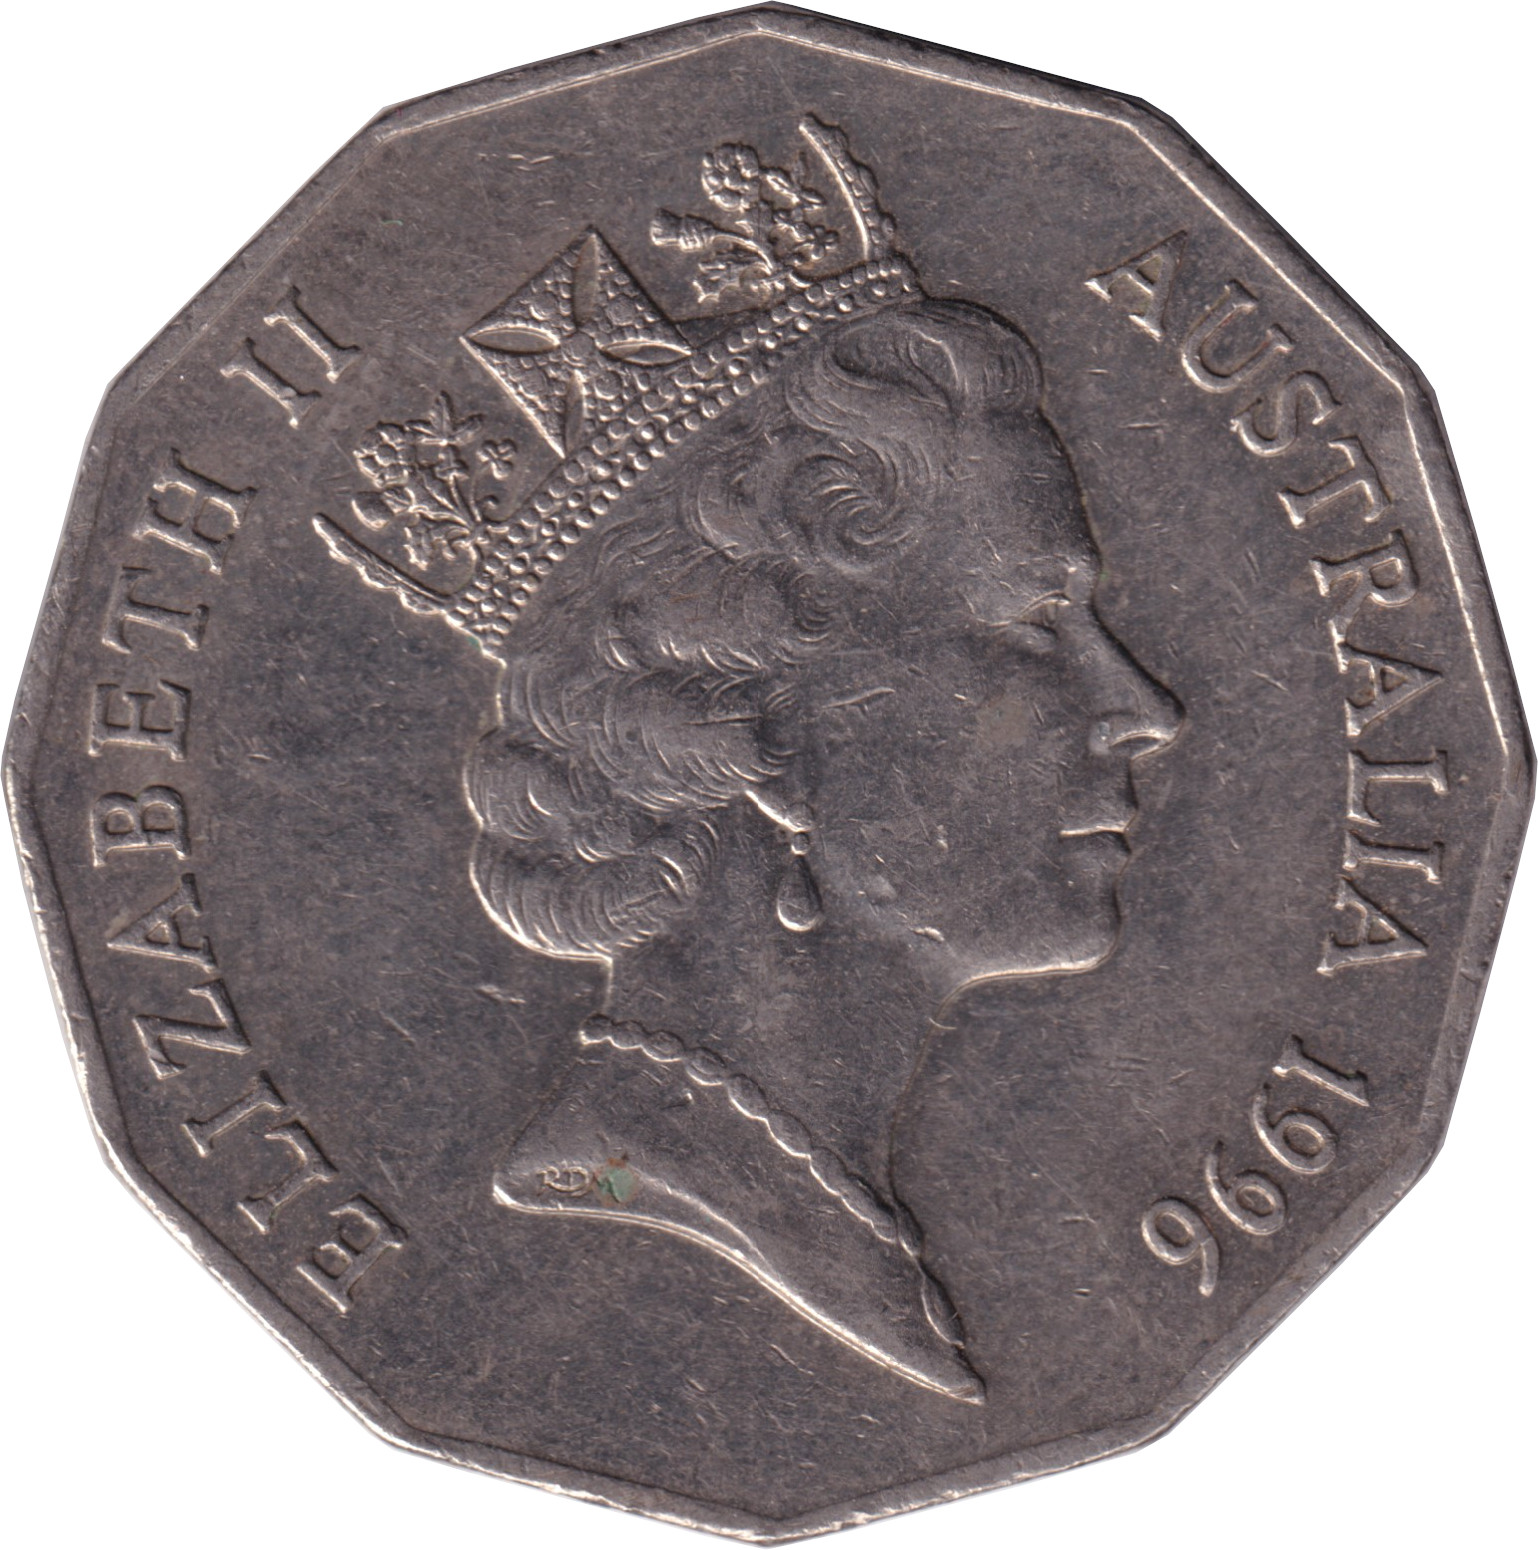 50 cents - Elizabeth II - Mature head